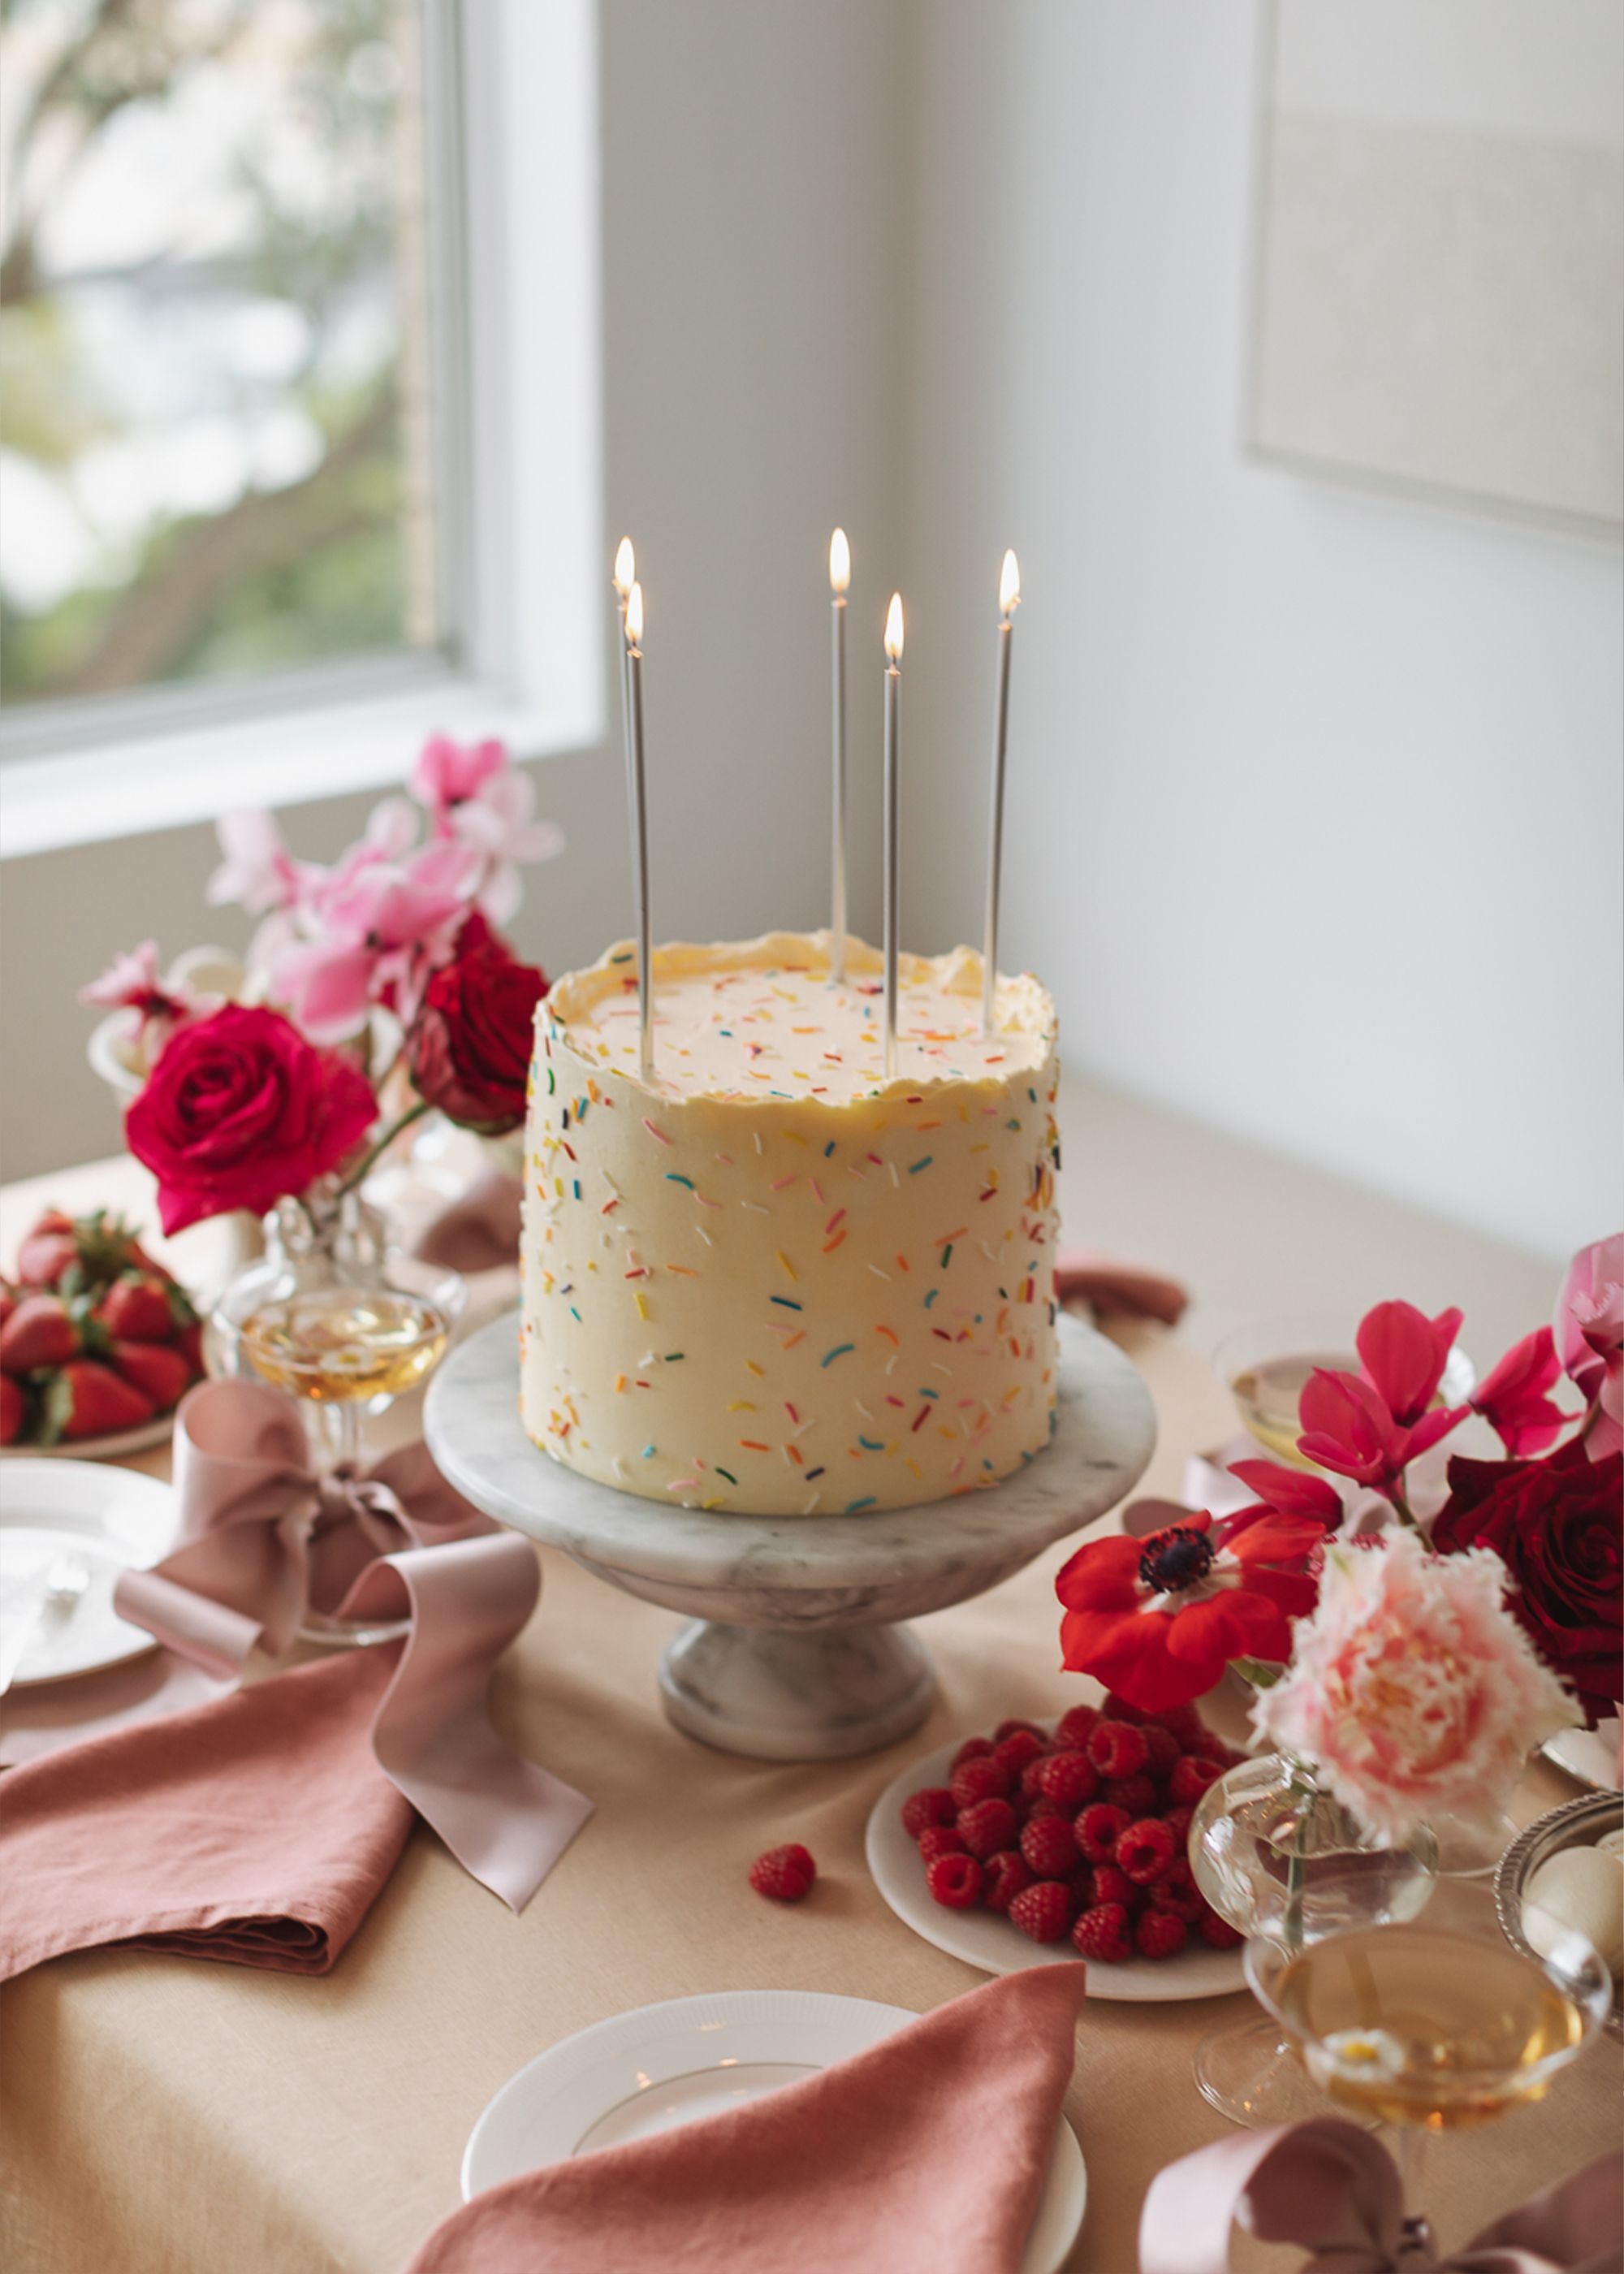 8) 12th Custom Cakes Design Ideas | Charm's Cakes and Cupcakes